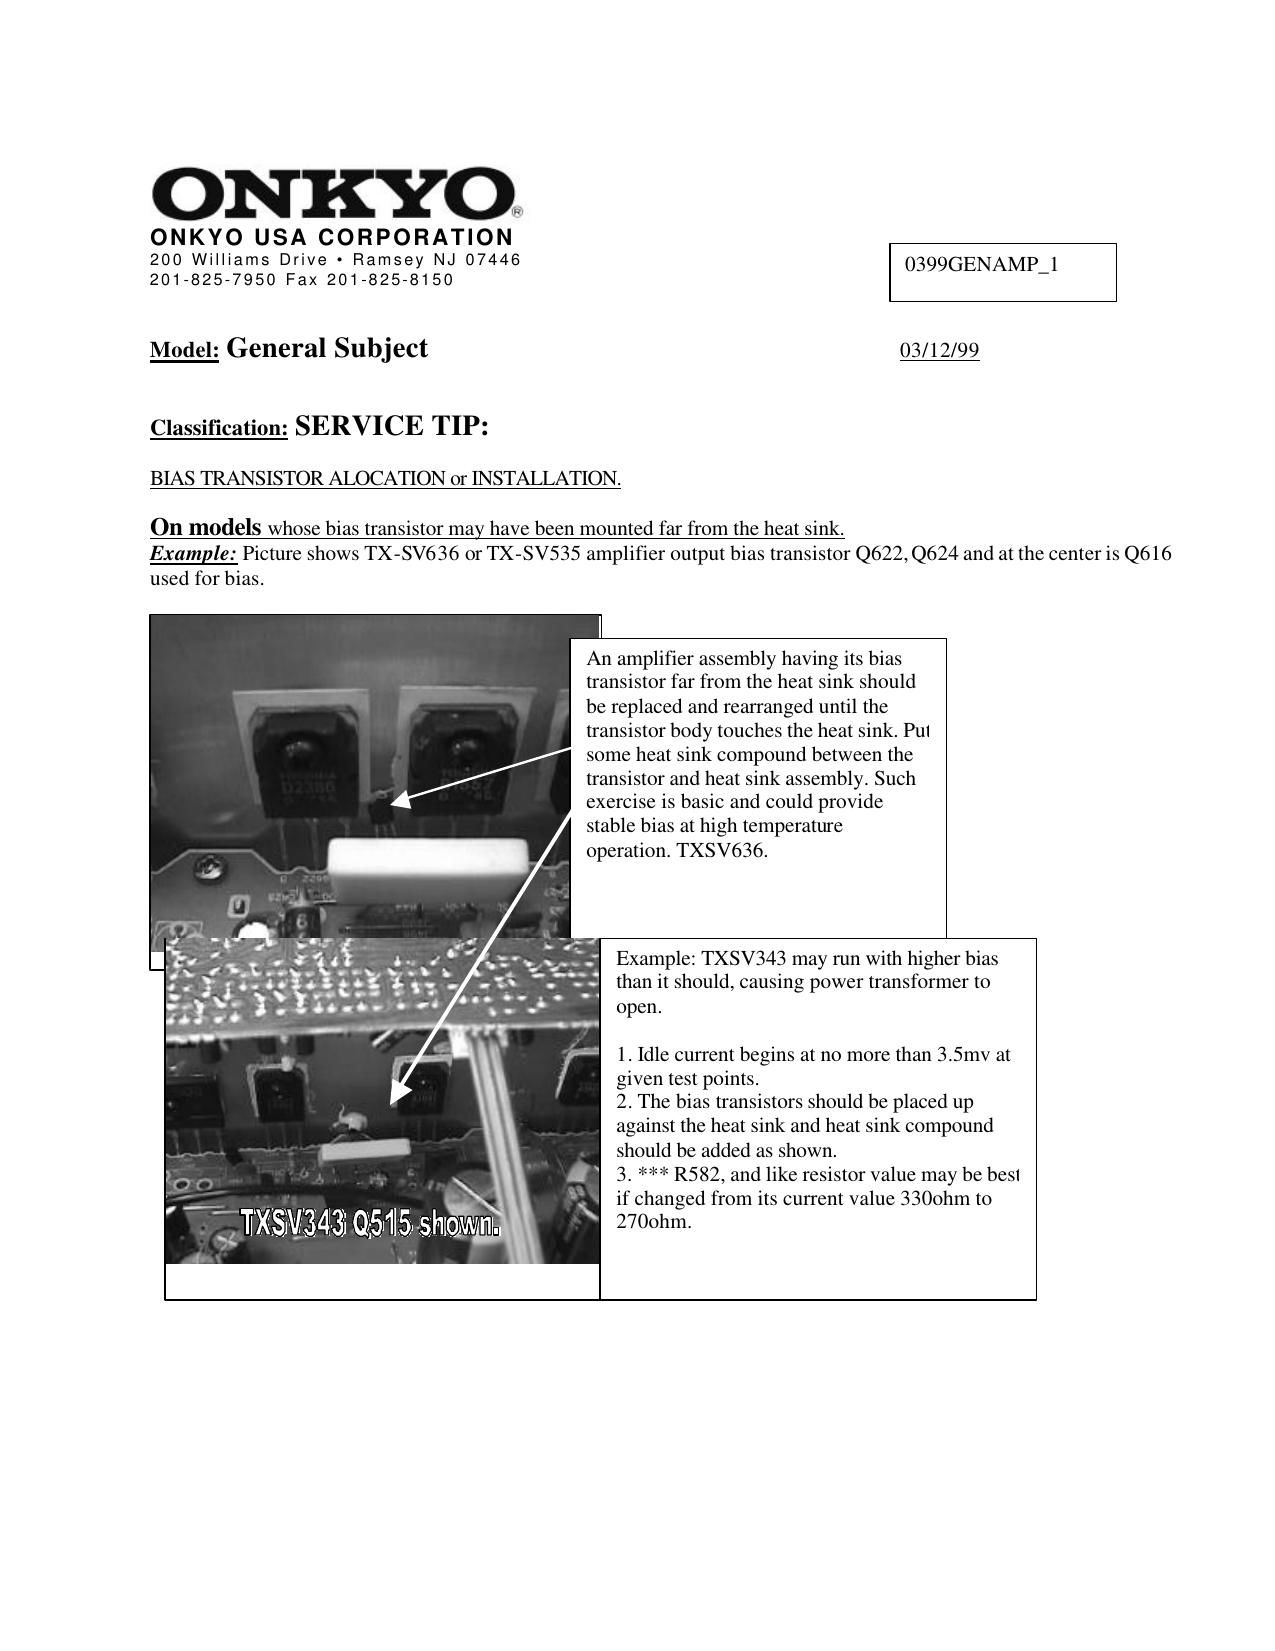 Onkyo TXSV 525 Service Information 2